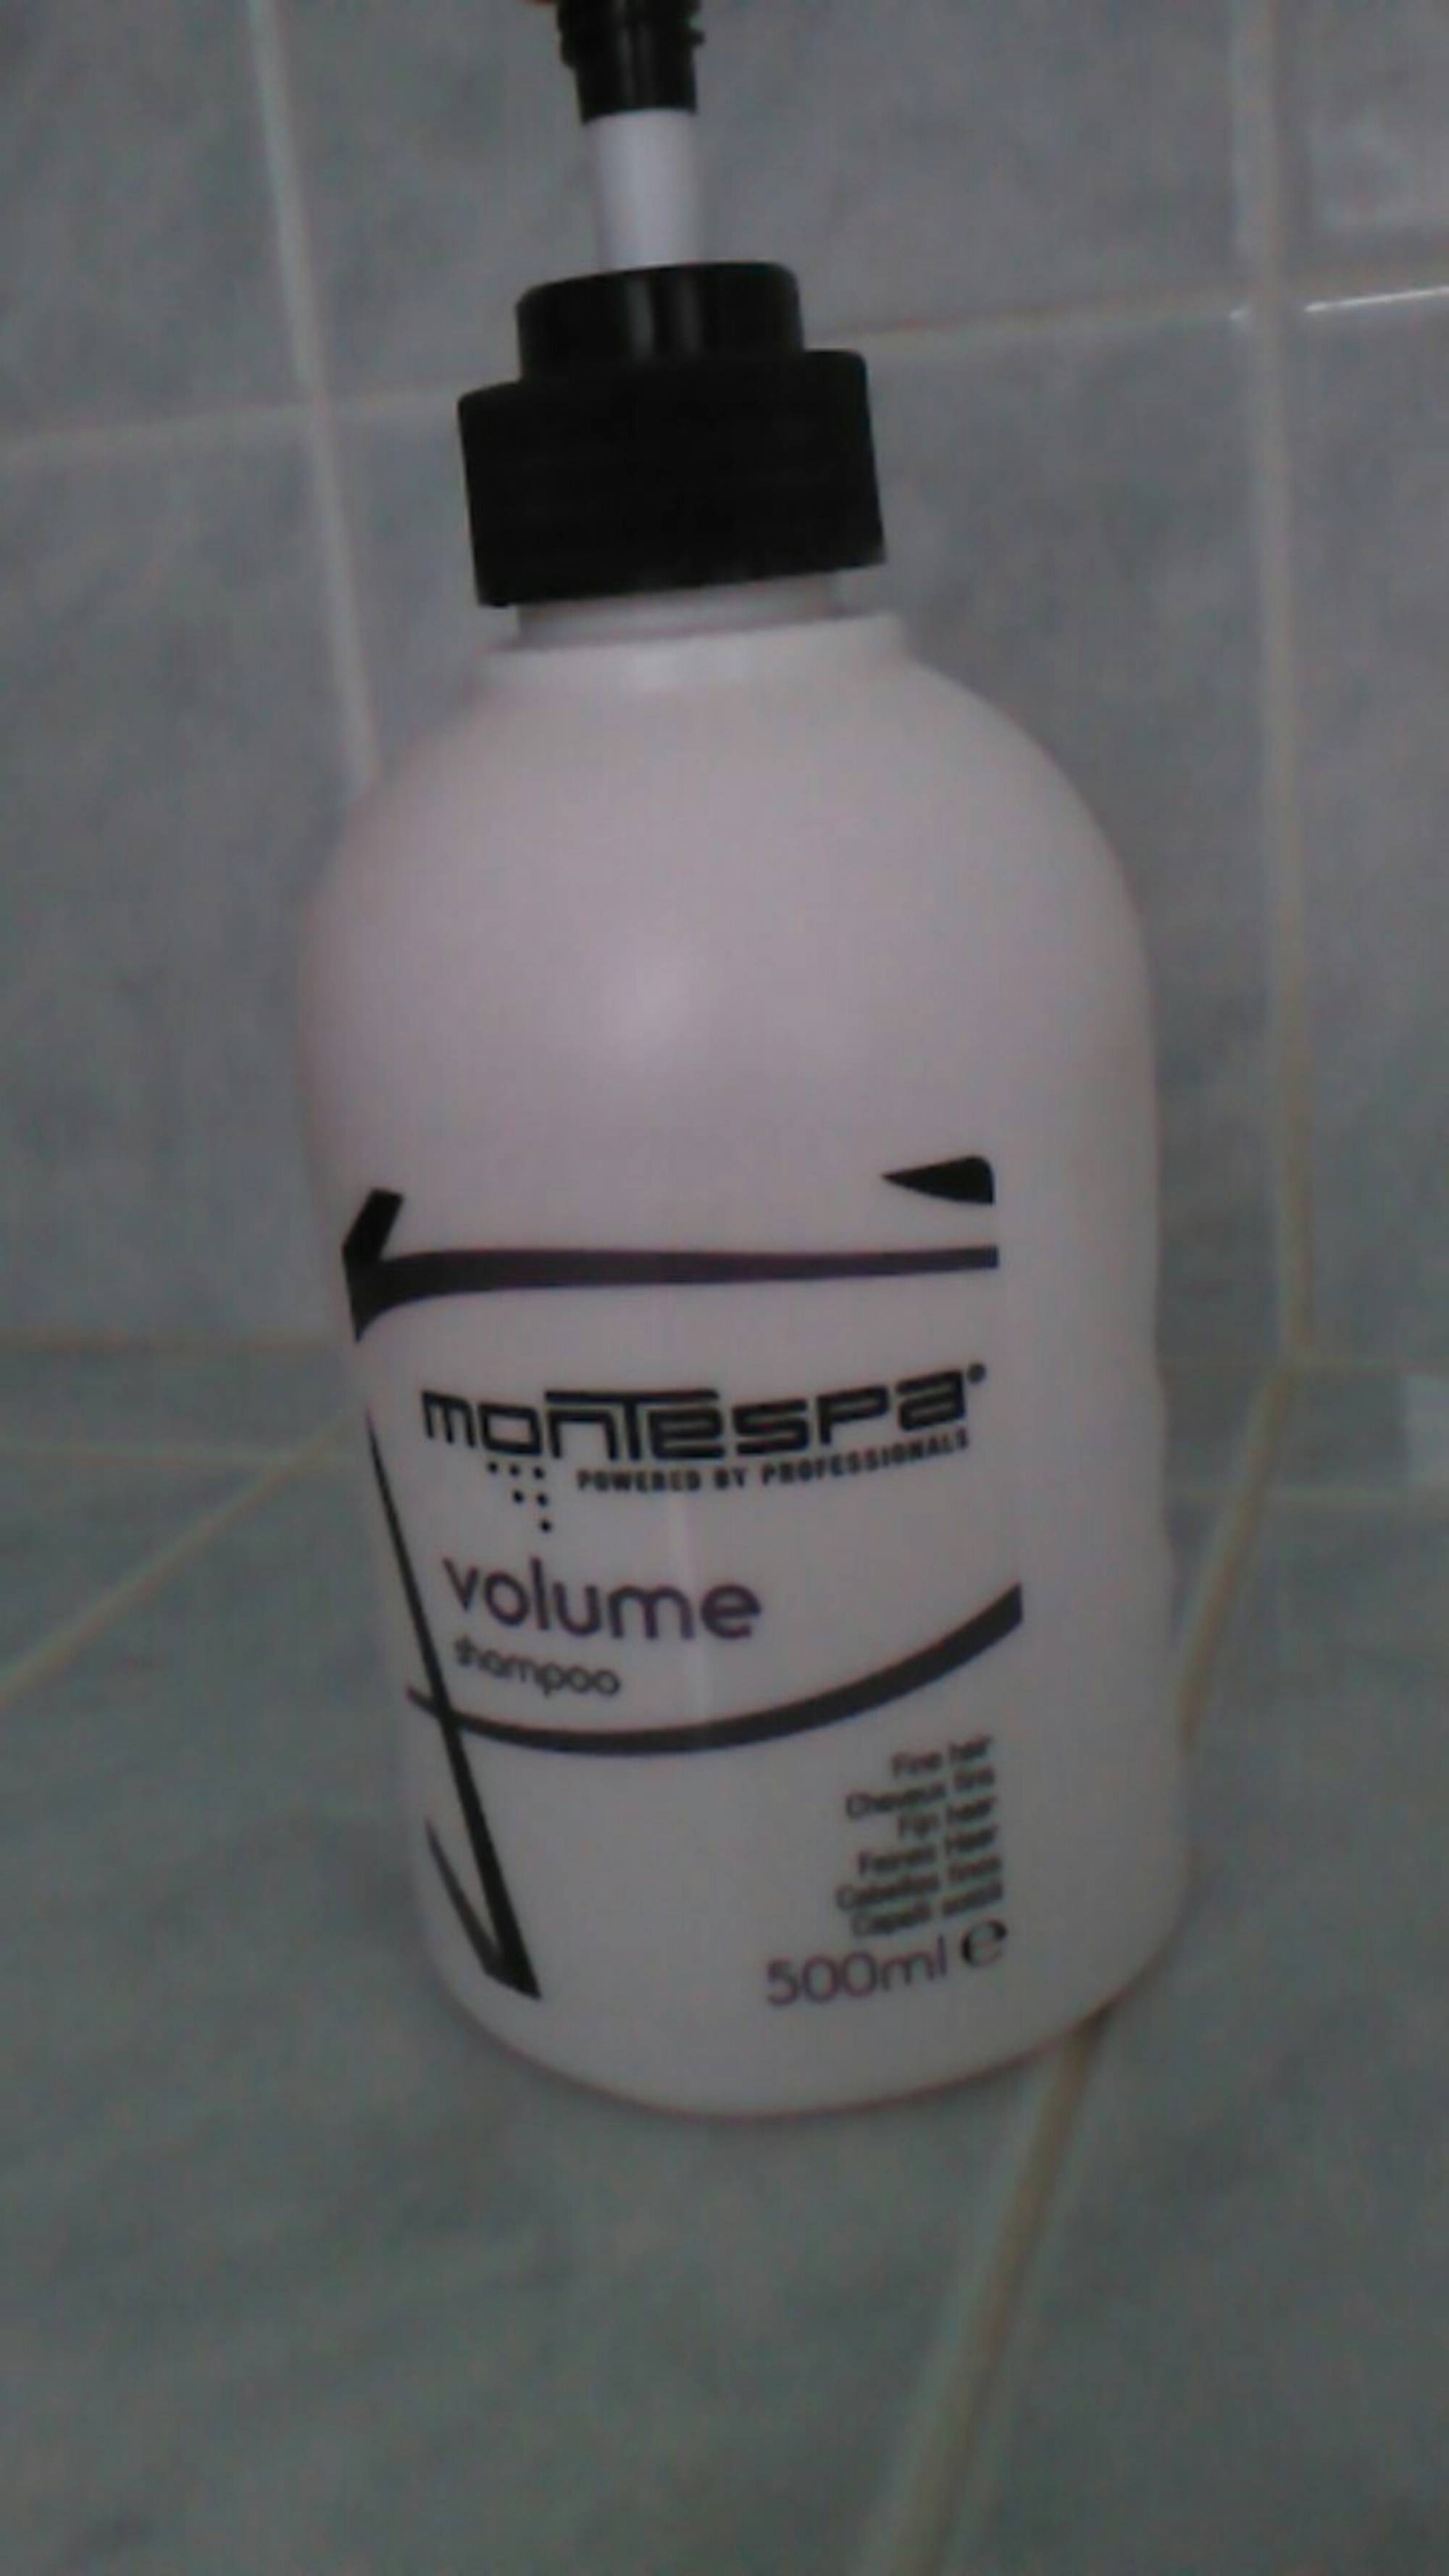 MONTESPA - Volume shampoo